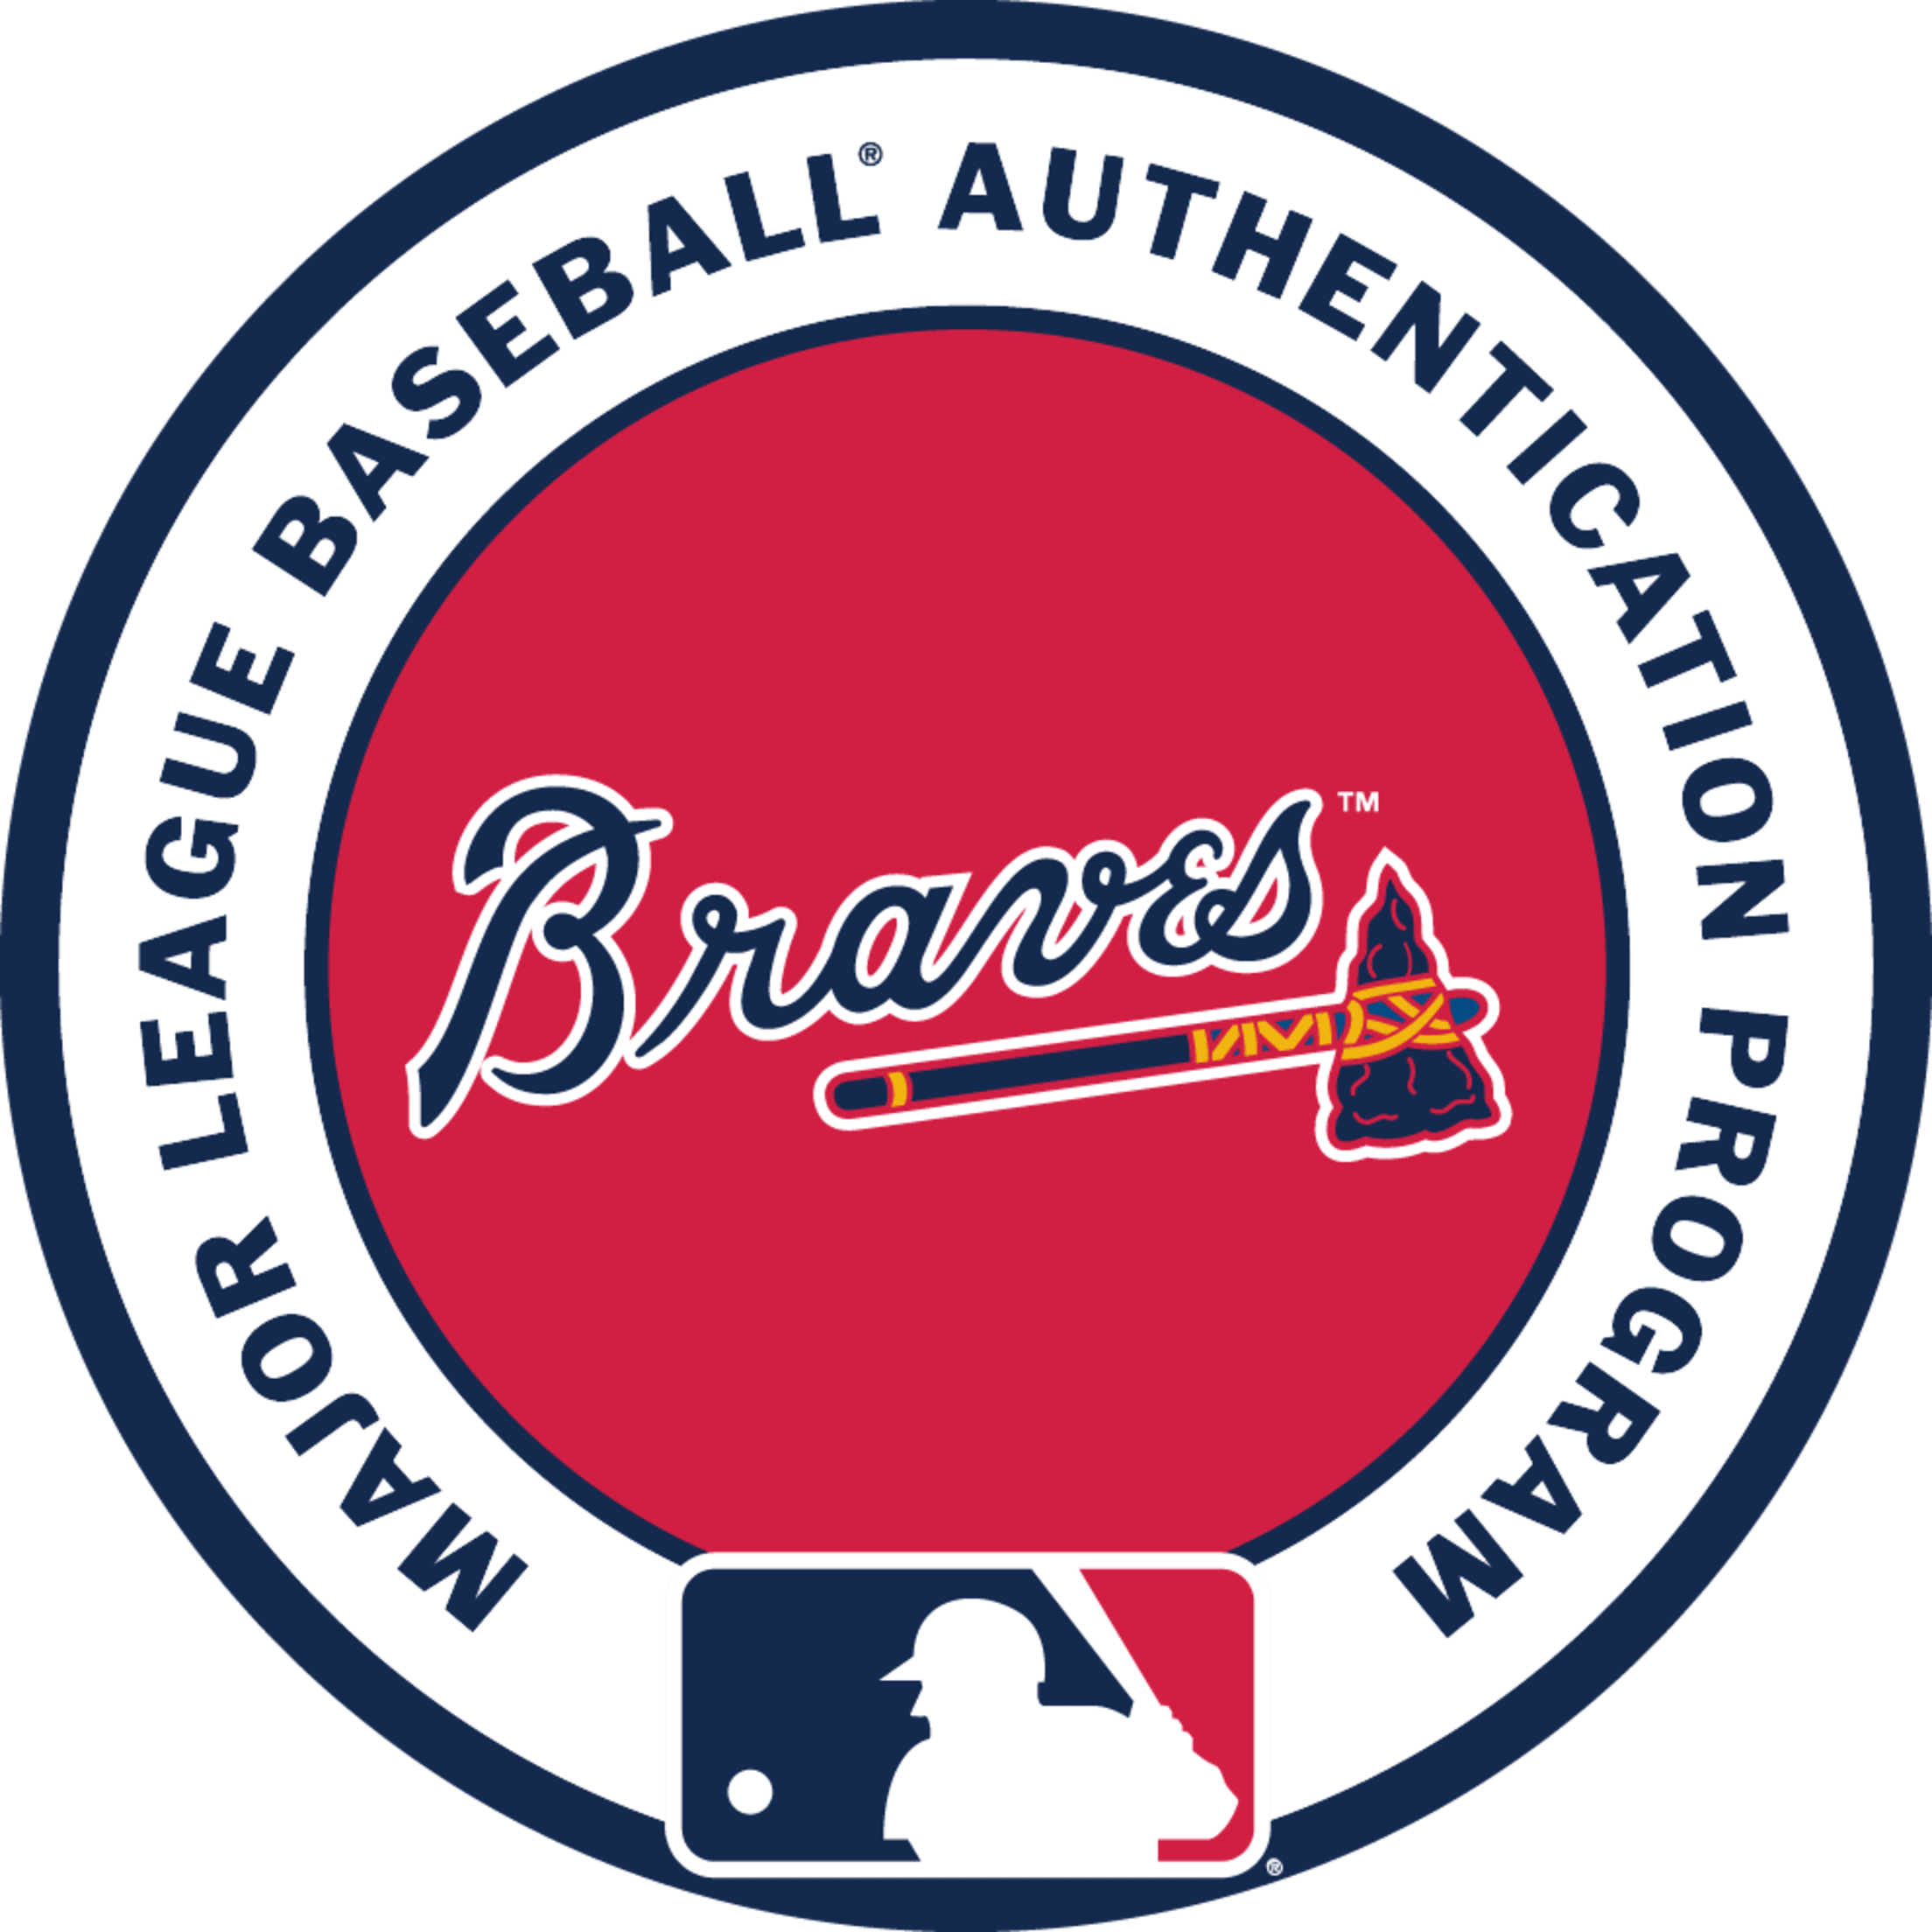 MLB authentication program